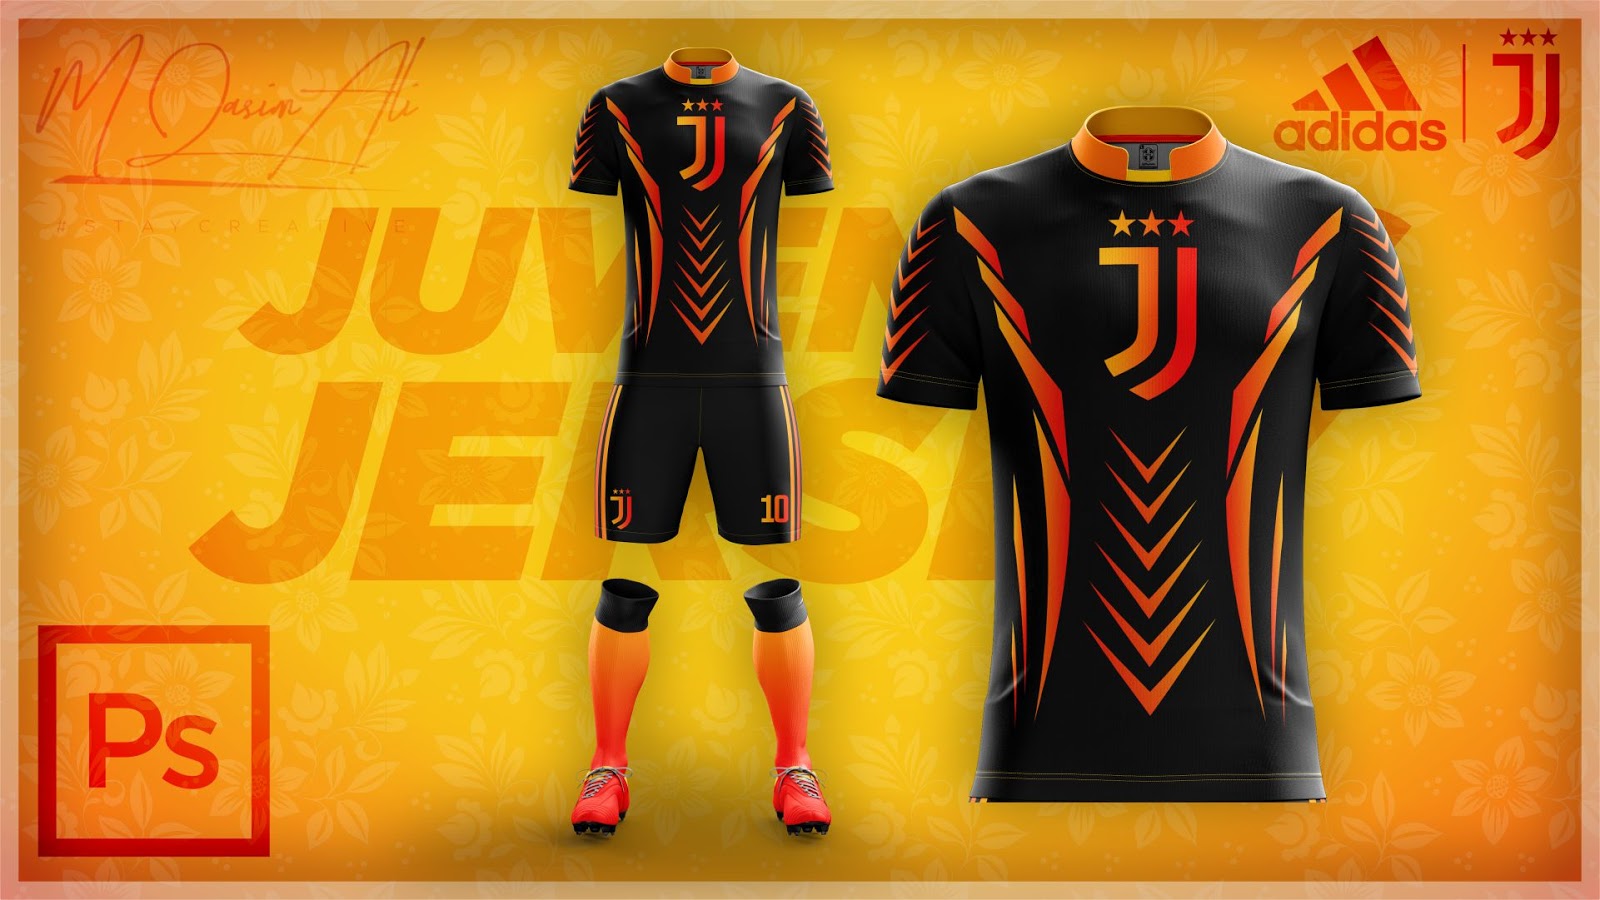 Download Adidas's Juventus Cool Concept Jersey Design in Photoshop cc 2019 by M Qasim Ali - M Qasim Ali ...